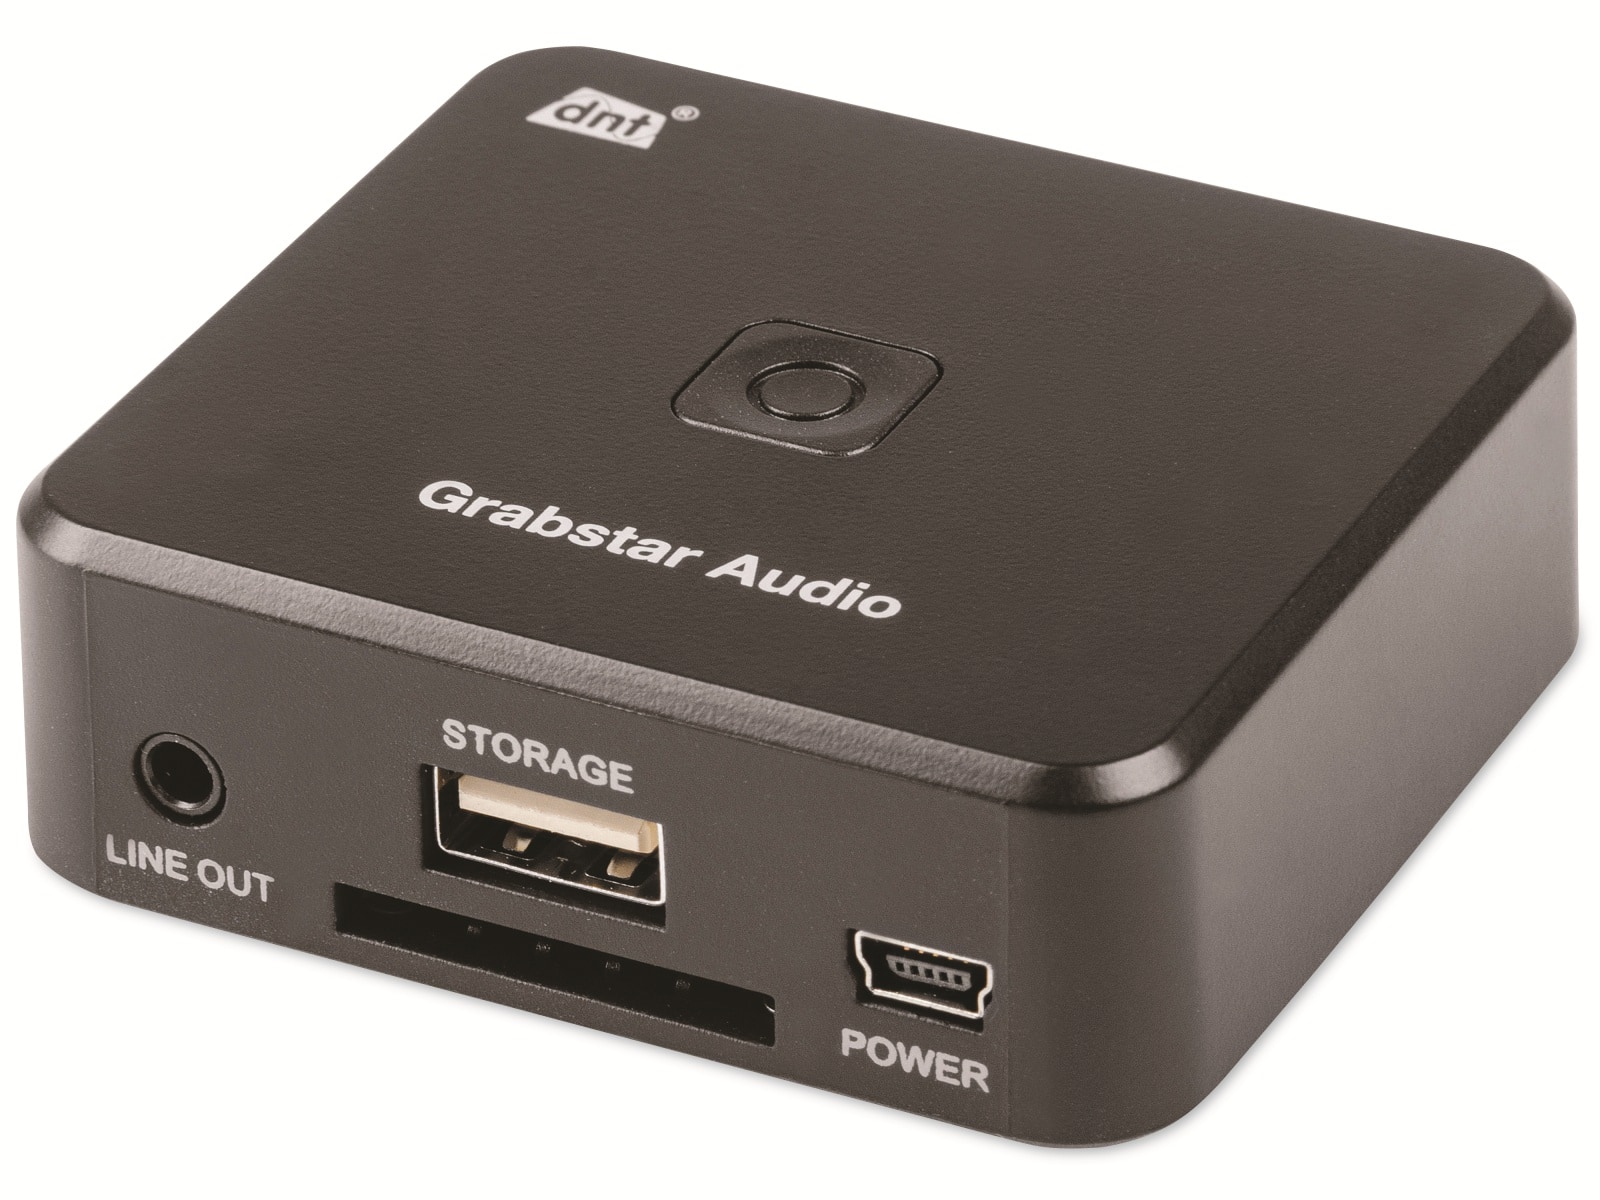 DNT Audio-Digitalisierer Grabstar Audio